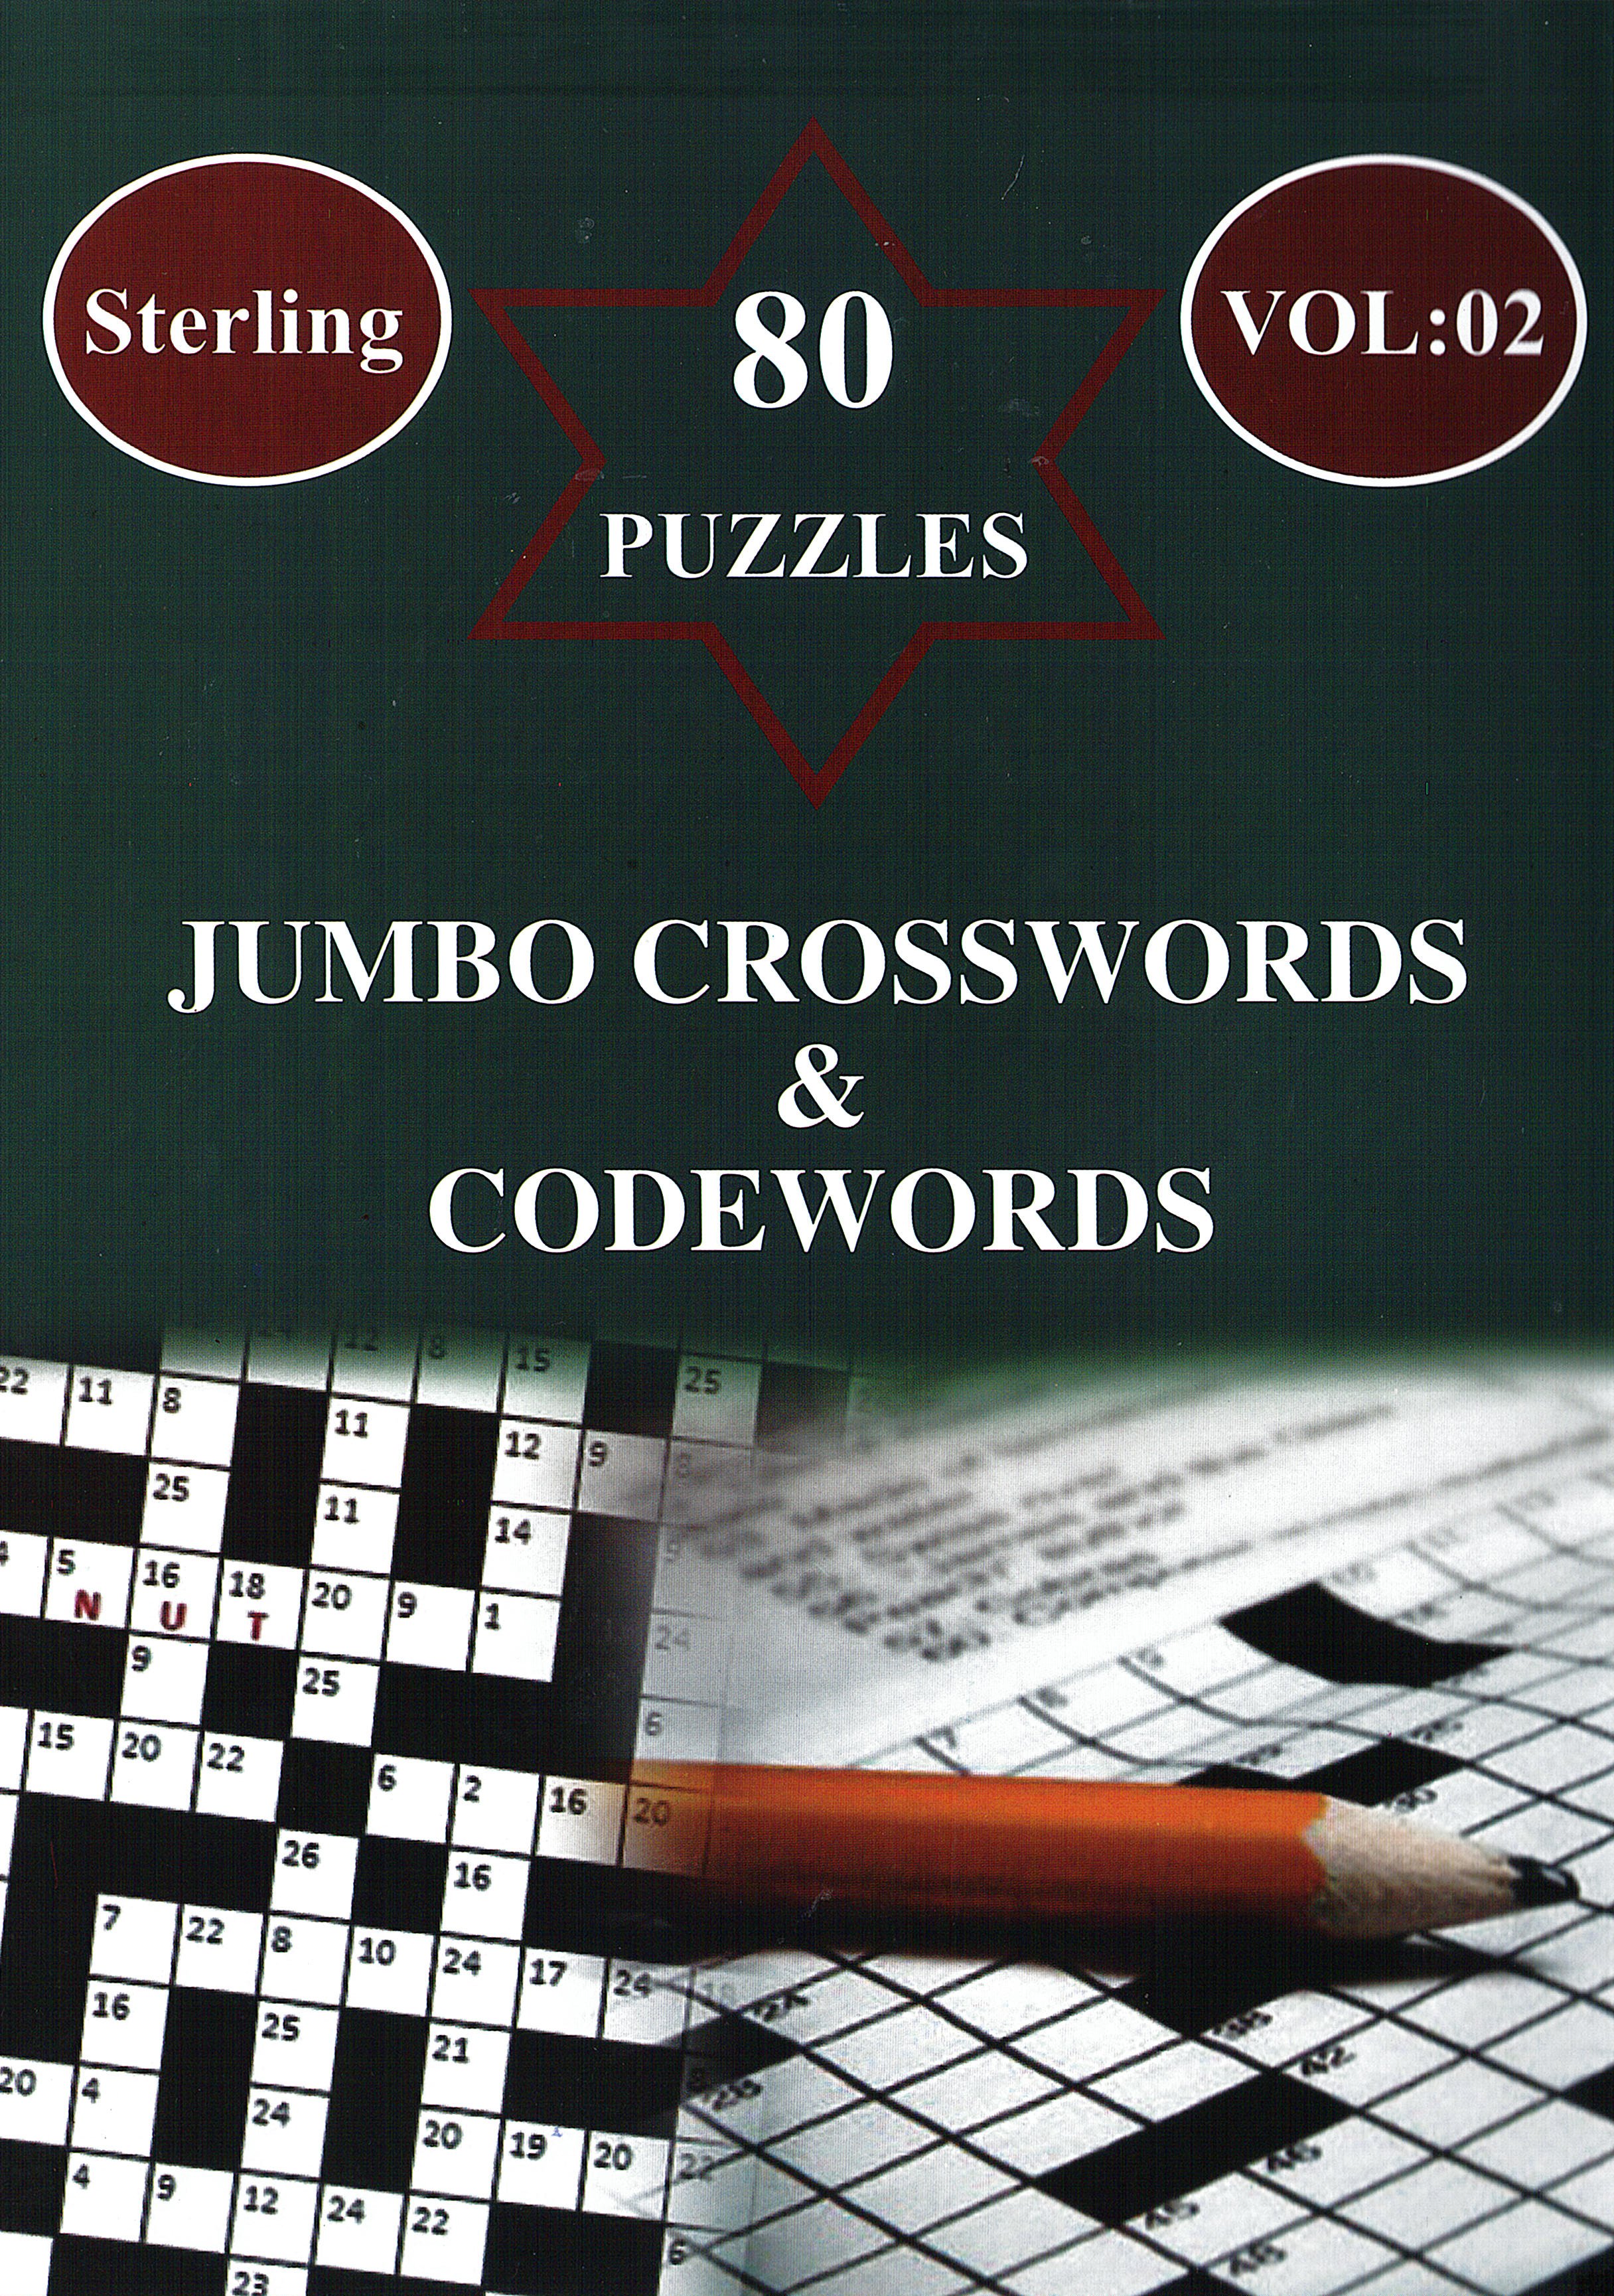 Sterling 80 Puzzles Jumbo Crosswords & Codewords ( Vol: 02 )